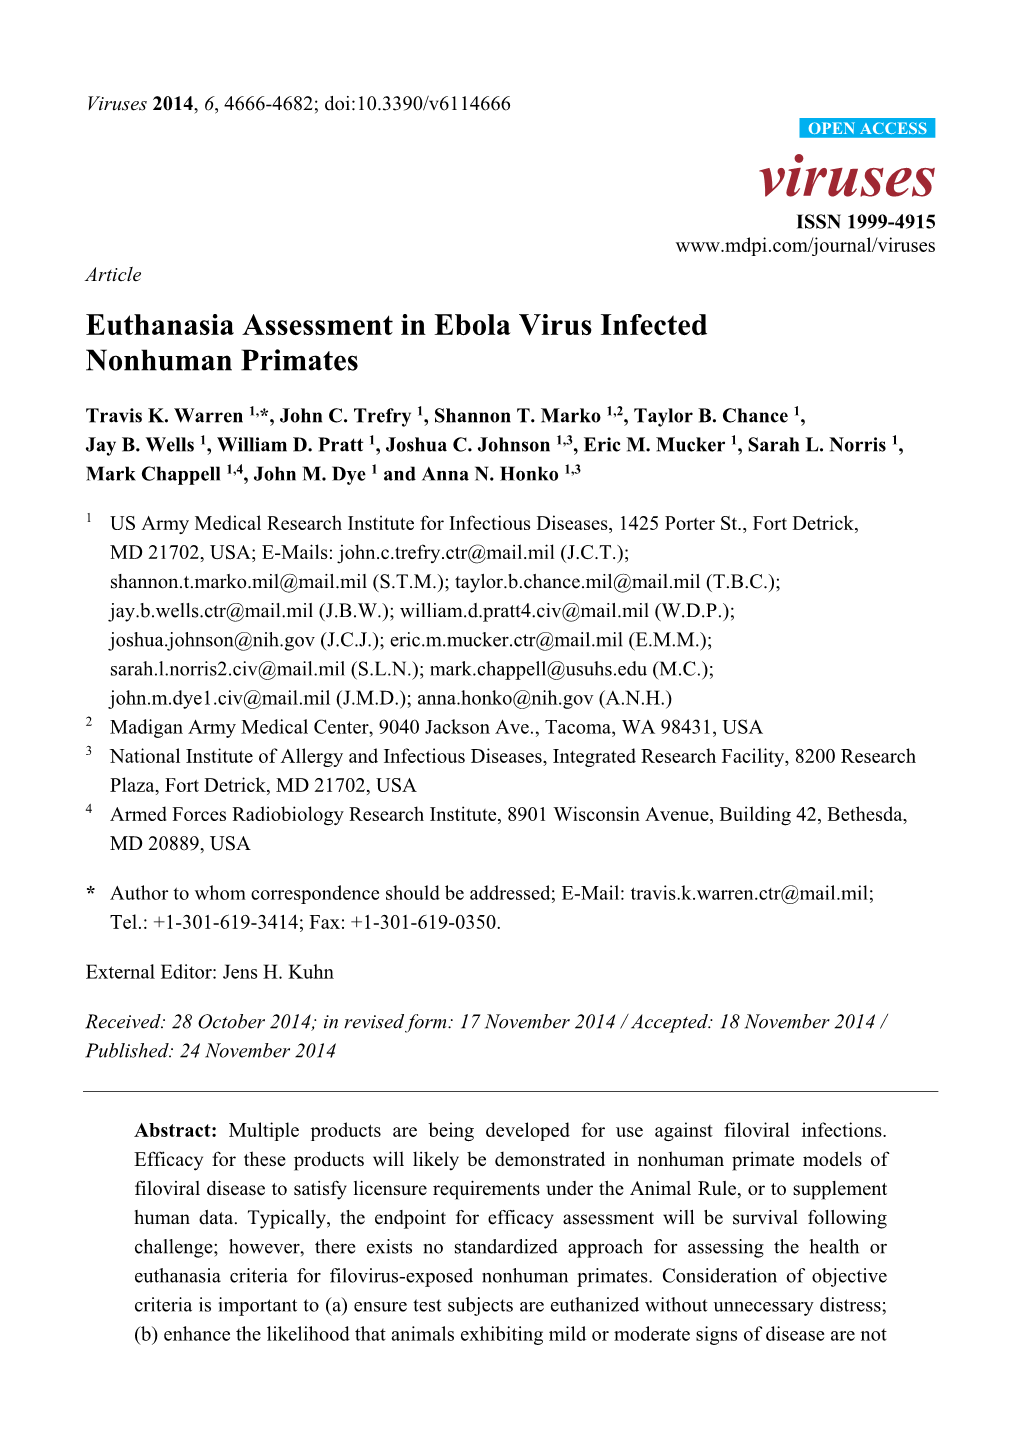 Euthanasia Assessment in Ebola Virus Infected Nonhuman Primates